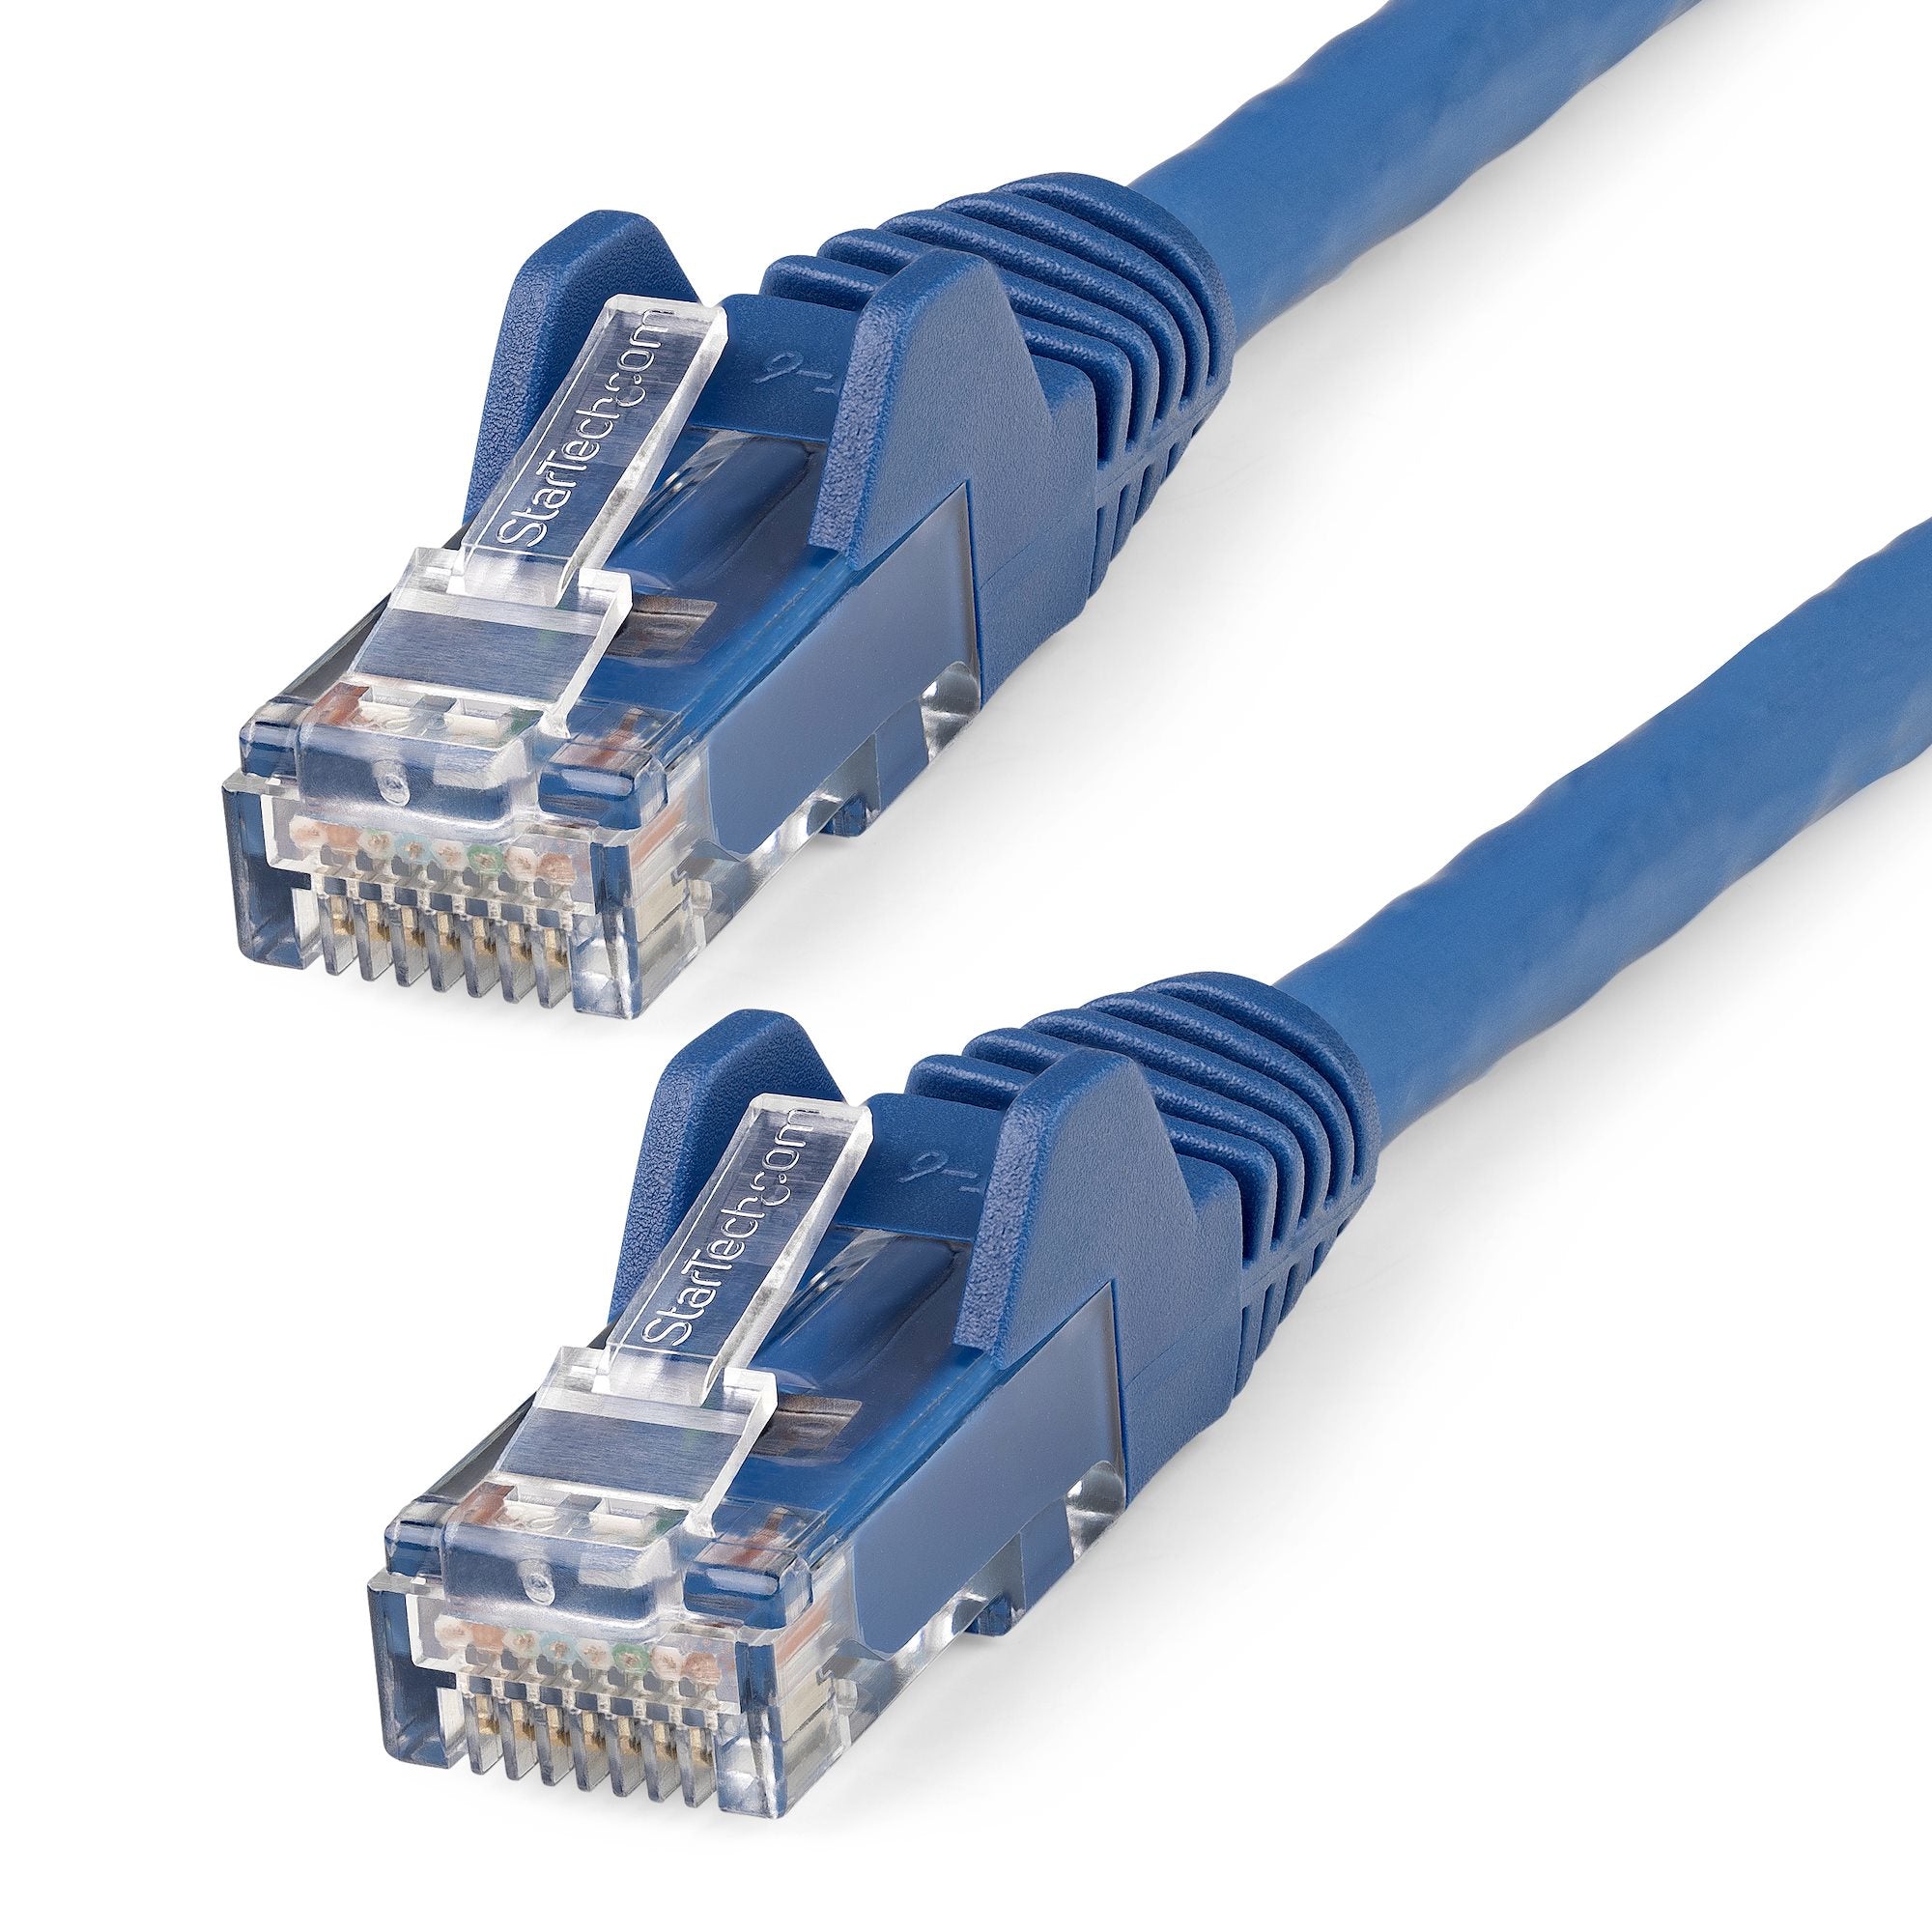 StarTech.com 7m CAT6 Ethernet Cable - LSZH (Low Smoke Zero Halogen) - 10 Gigabit 650MHz 100W PoE RJ45 10GbE UTP Network Patch Cord Snagless with Strain Relief - Blue, CAT 6, ETL Verified, 24AWG